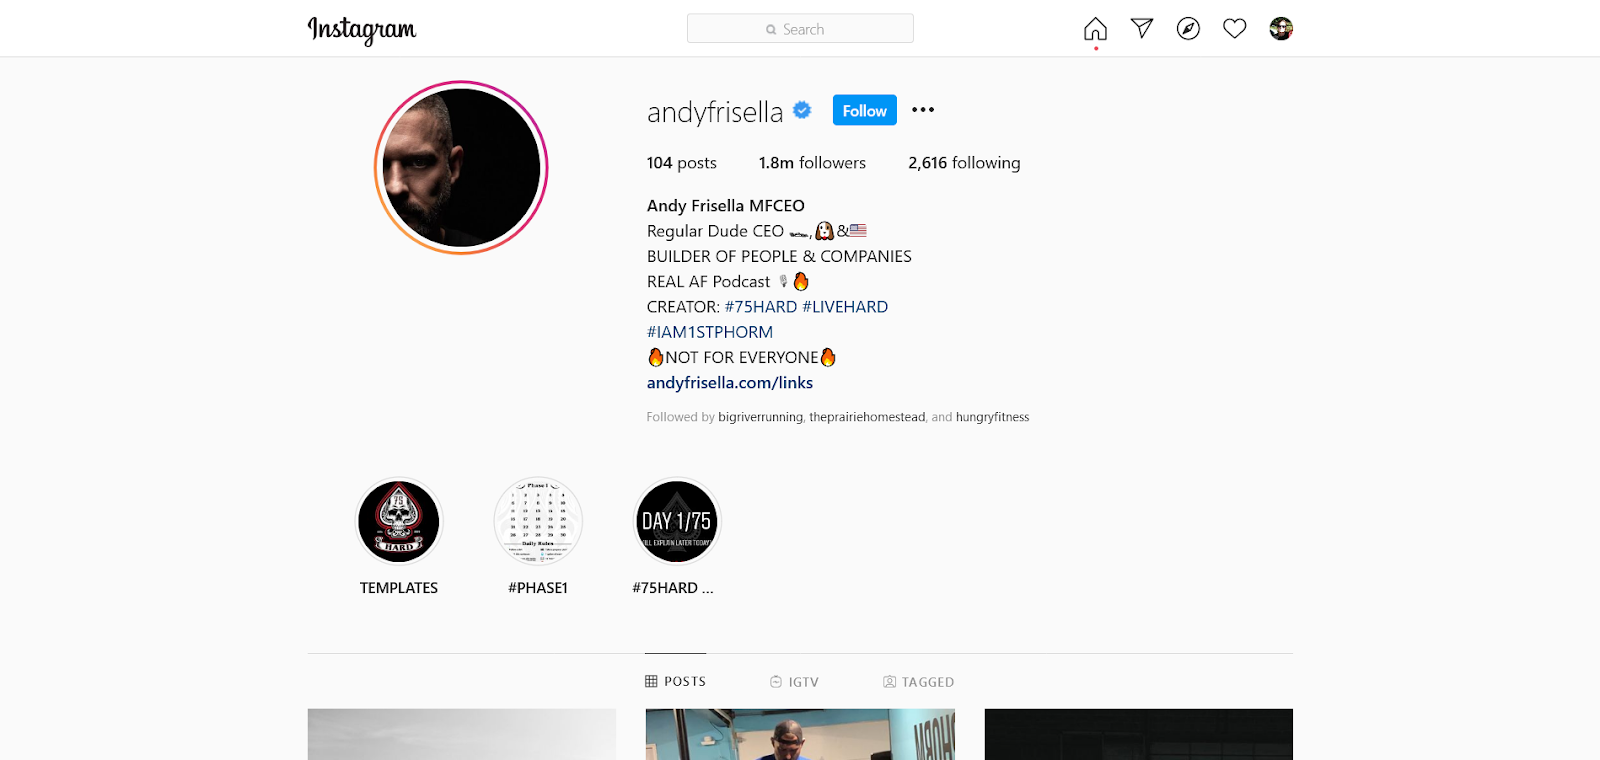 Andy Frisella Instagram アカウントのプロフィールにハッシュタグを使用